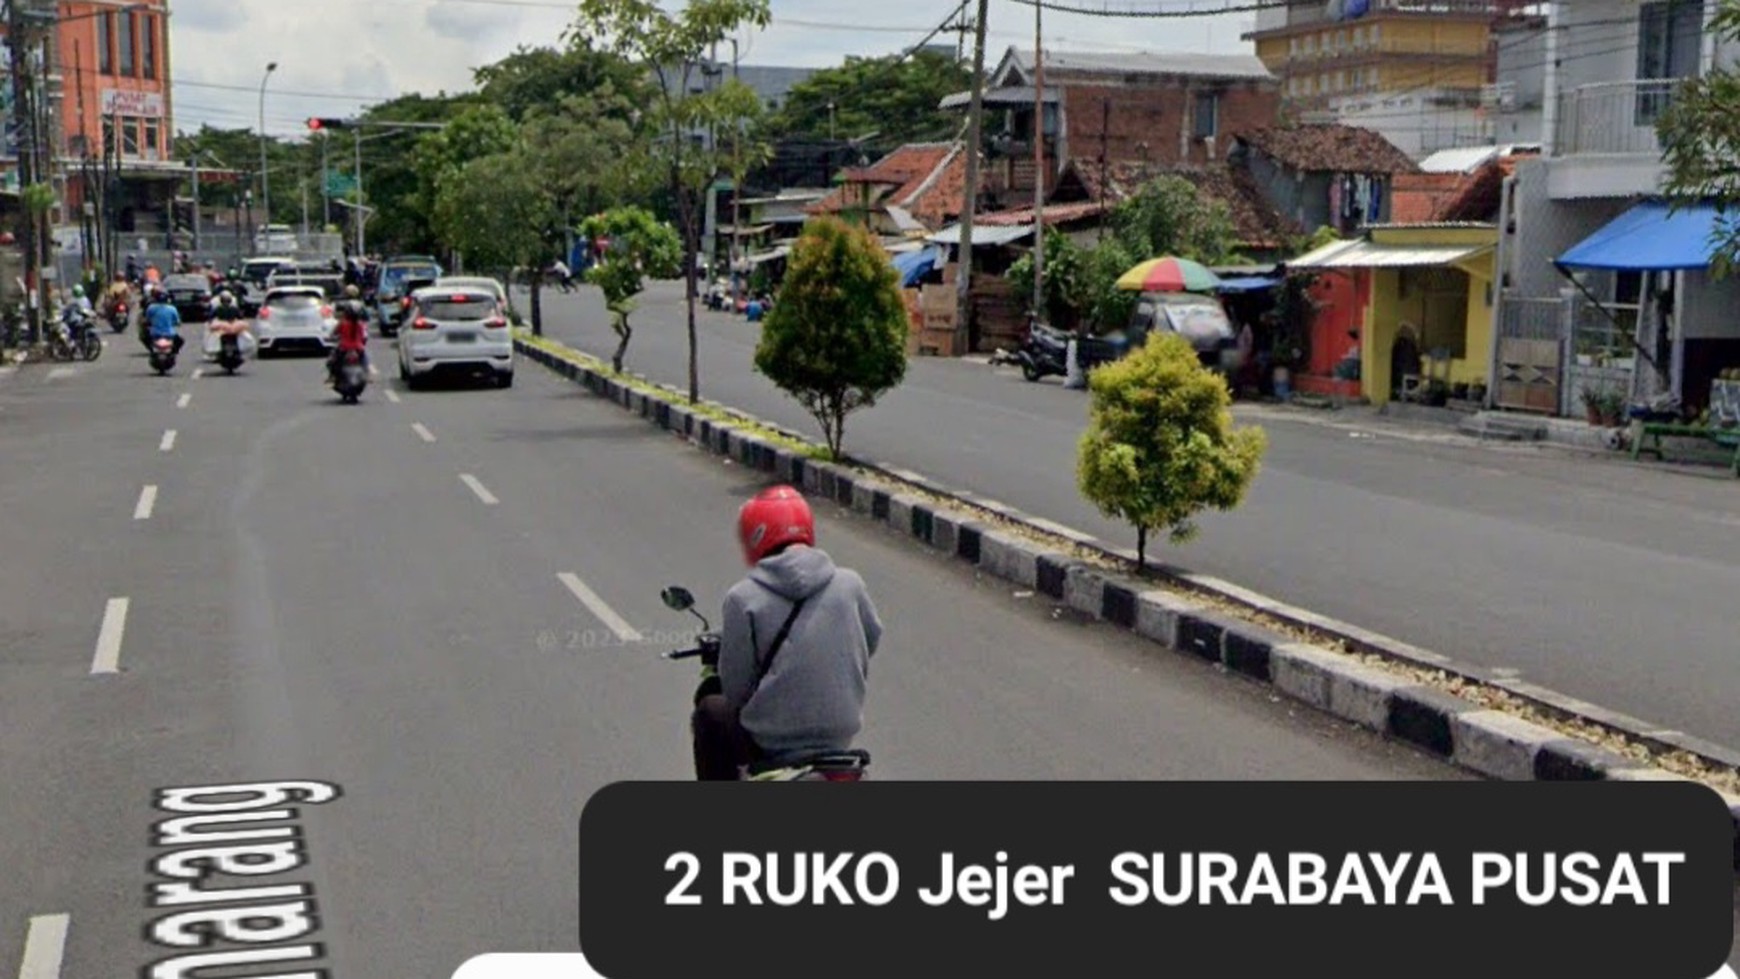  Dijual 2 Jejer Ruko Nol Jalan Semarang - Komersial Area - Cocok buat Segala Usaha dekat Raden Saleh, Pasar Turi , Bubutan